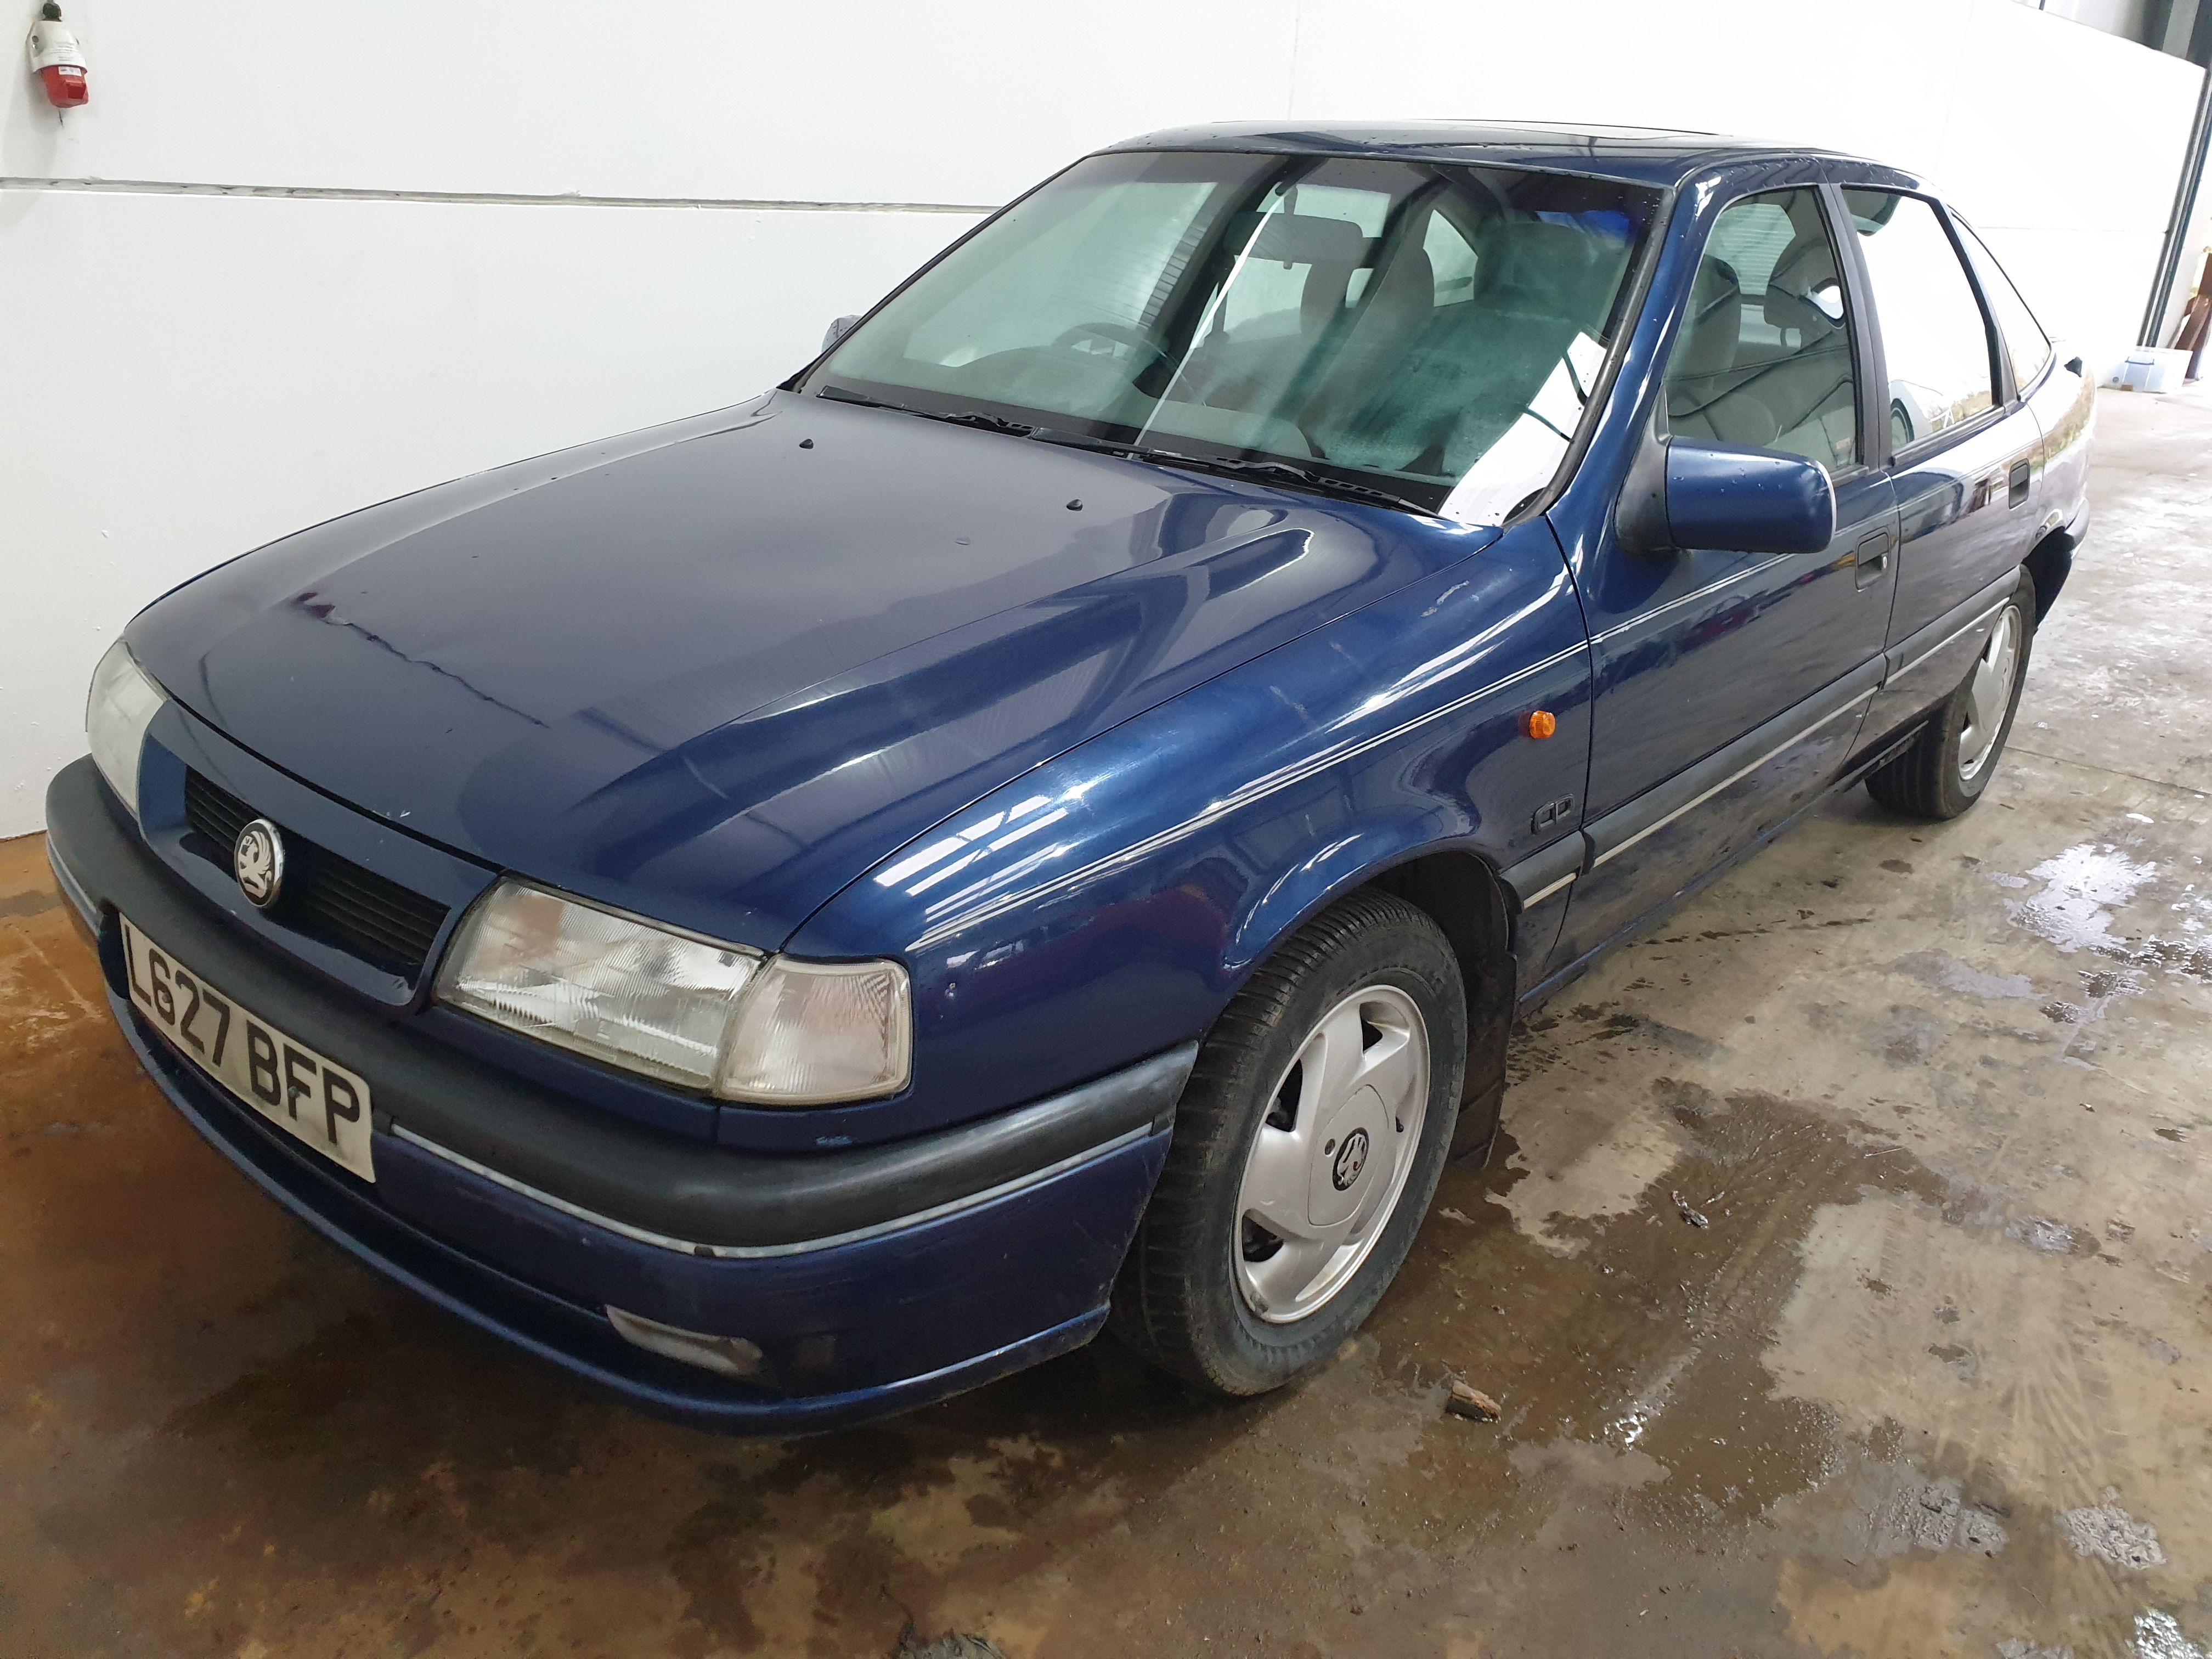 1994 Vauxhall Cavalier CD Auto - Image 7 of 16